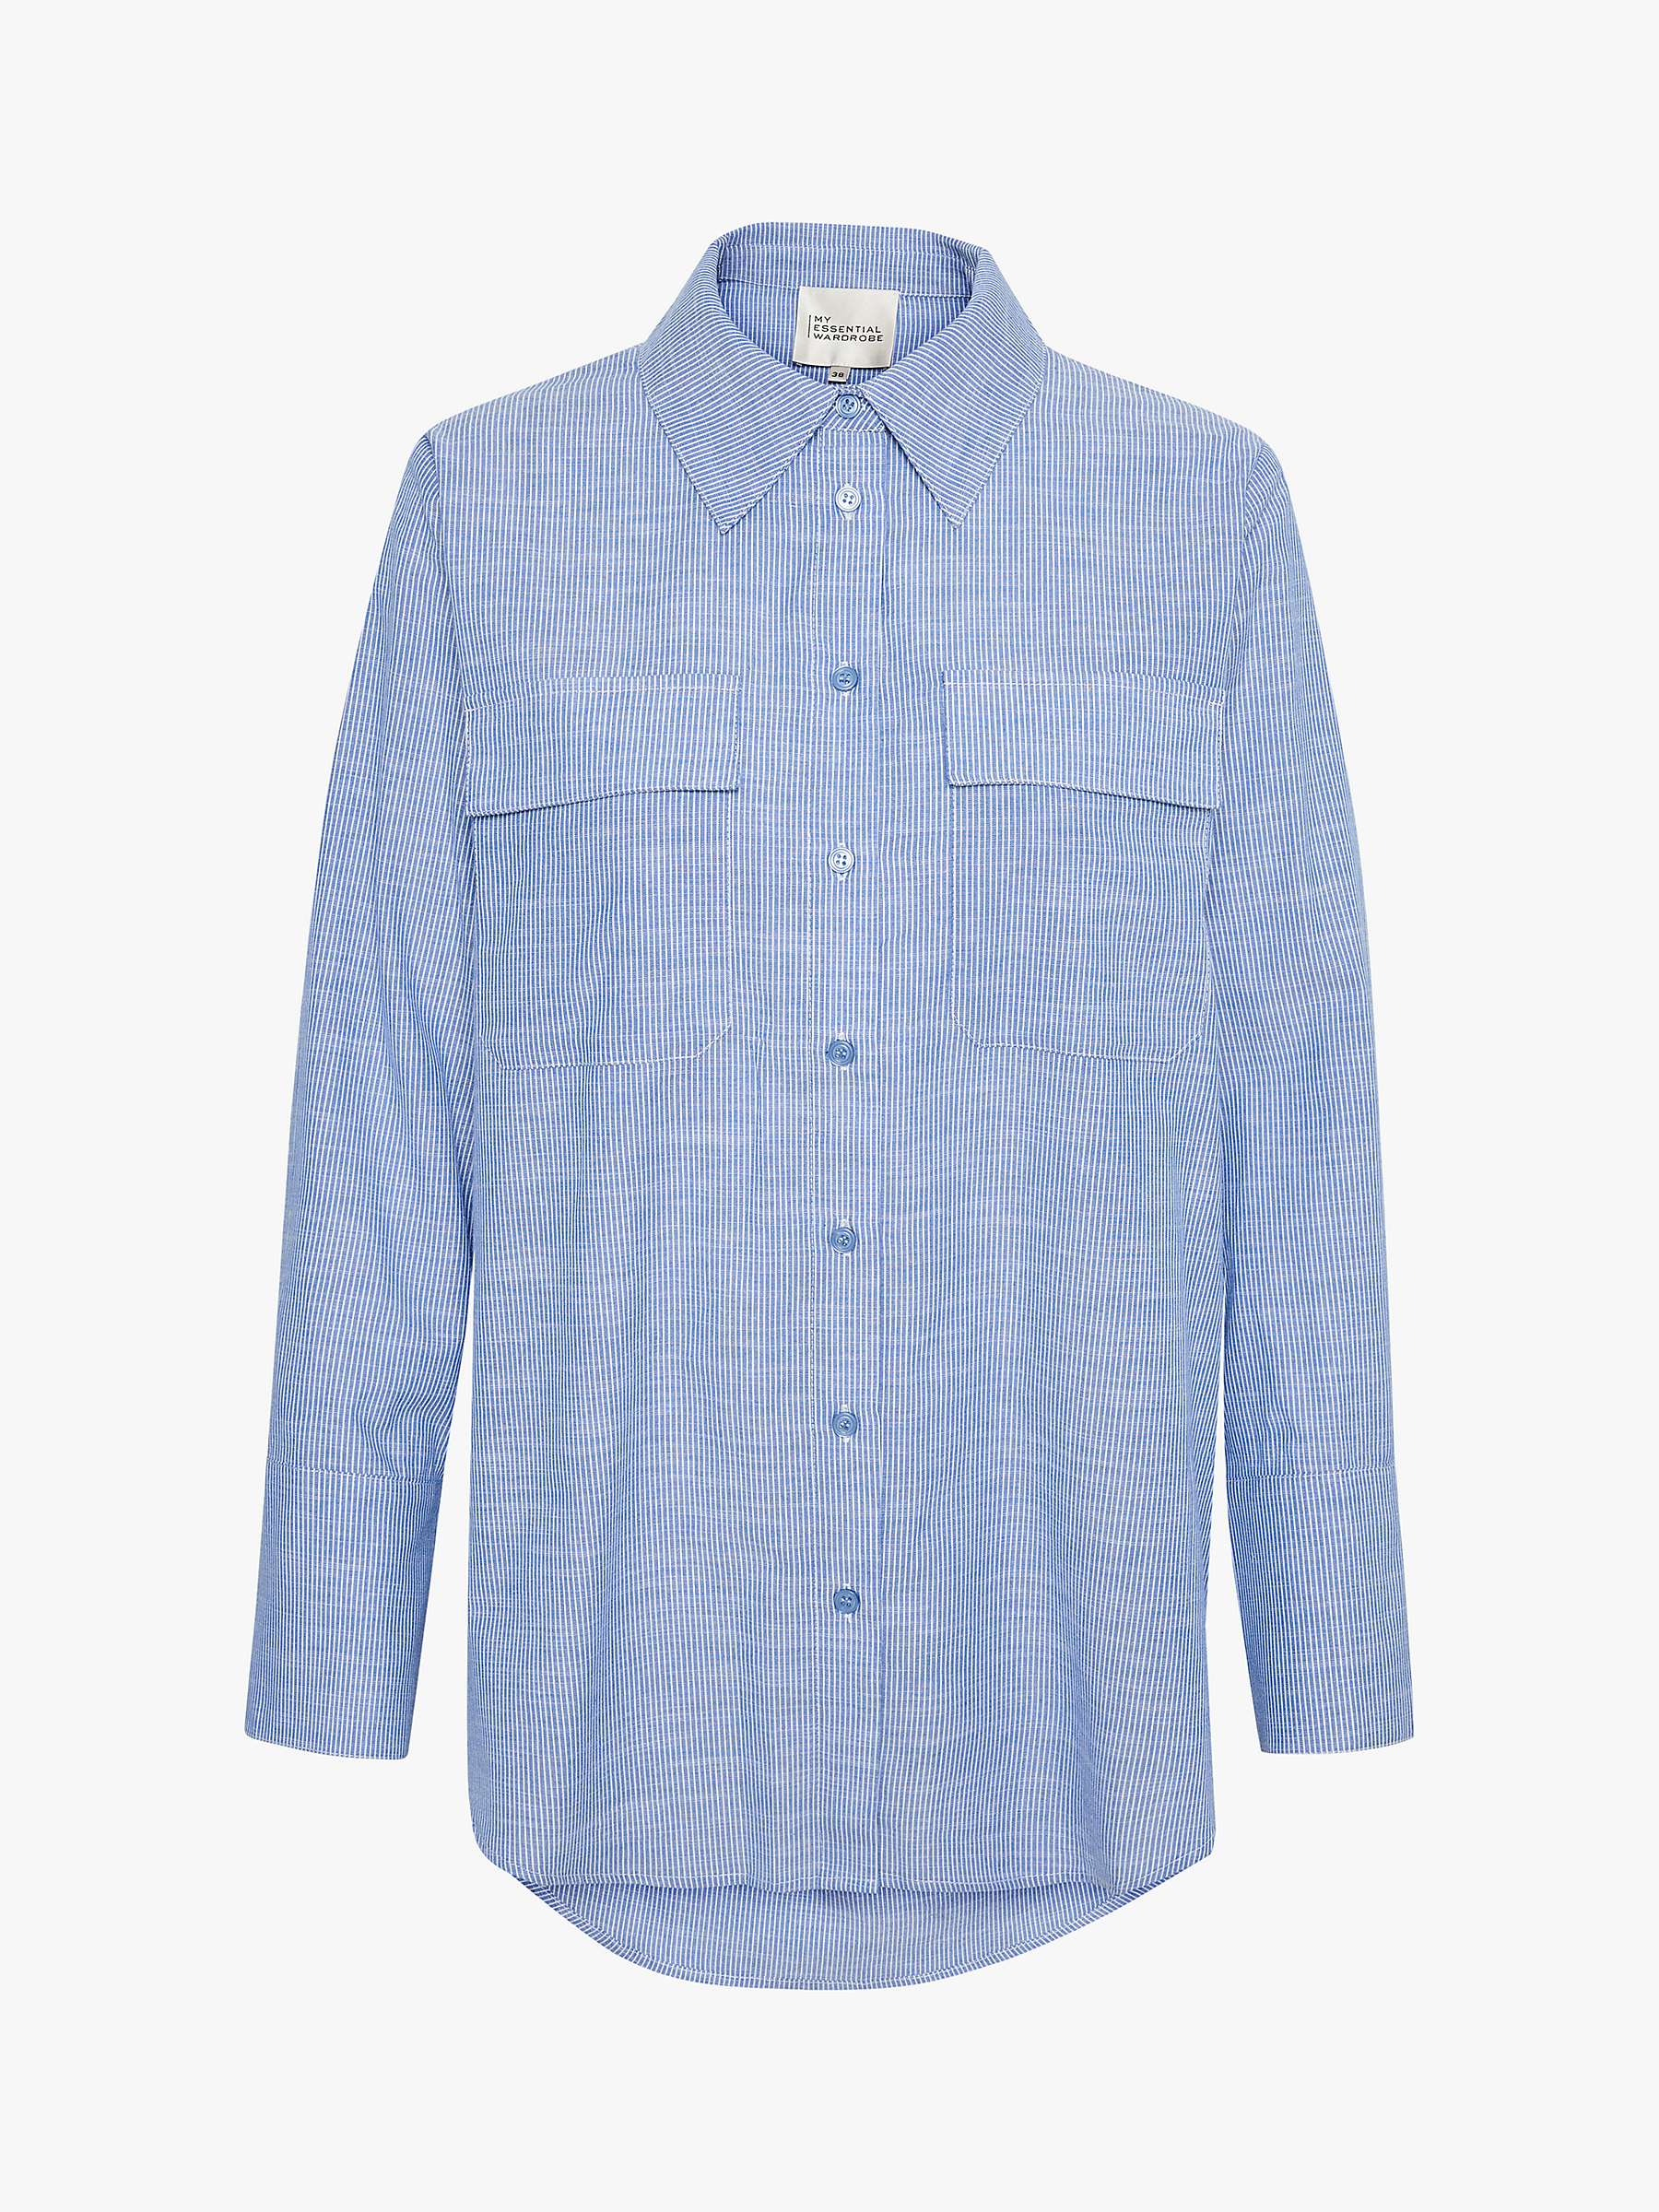 Buy MY ESSENTIAL WARDROBE Skye Regular Fit Cotton Shirt, Delft Blue Online at johnlewis.com